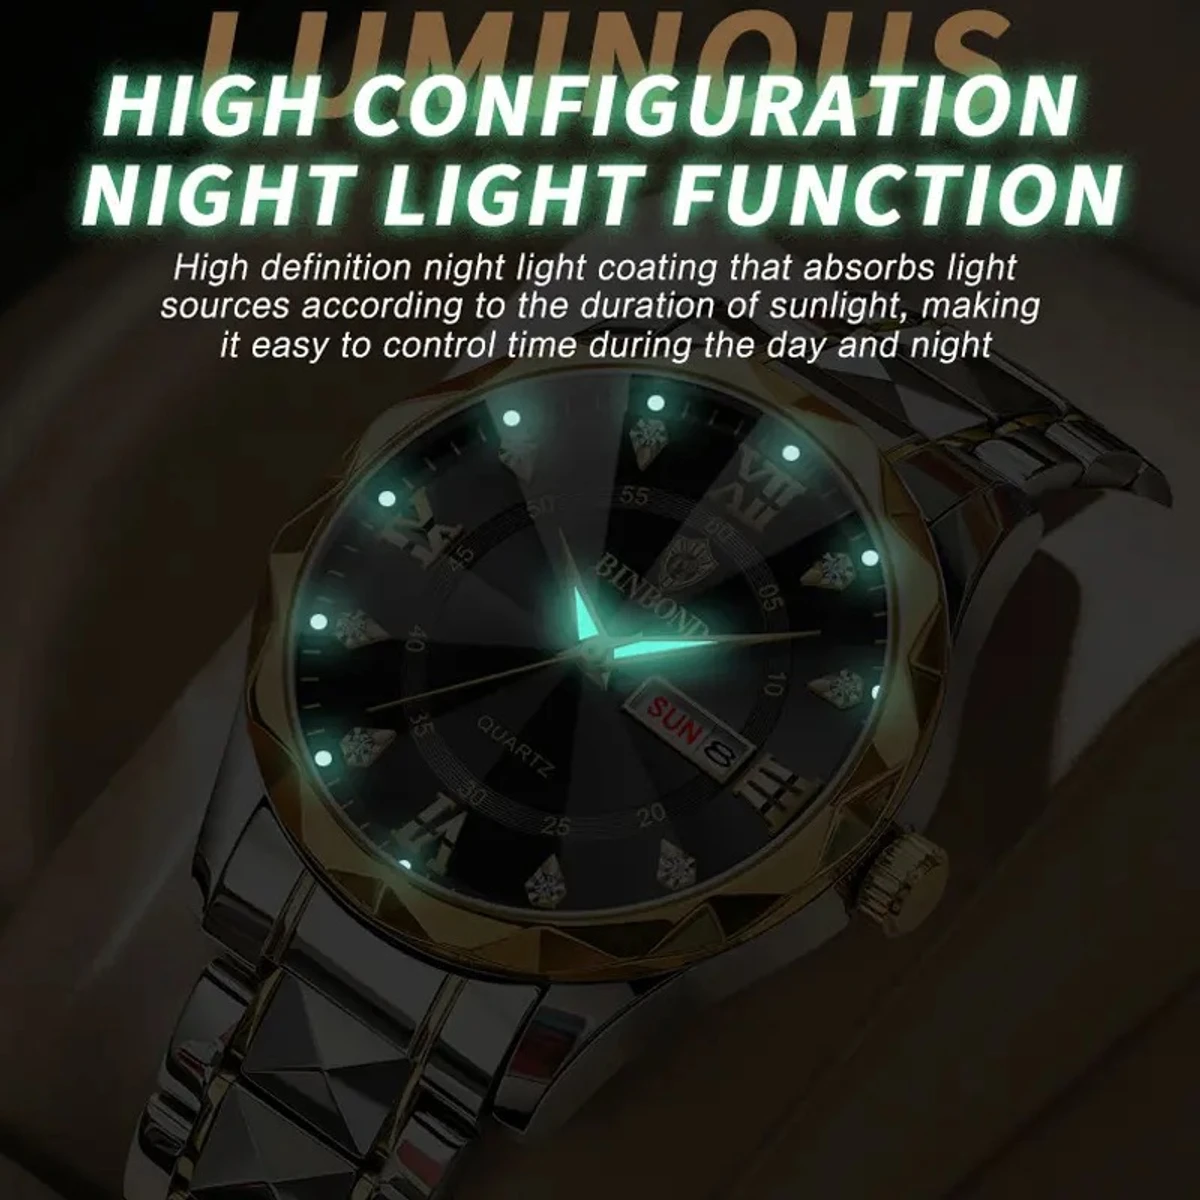 100% Original Luxury Binbond Authentic Men's Watch Waterproof Night Light Dual Calendar Watch Men's Quartz Watch